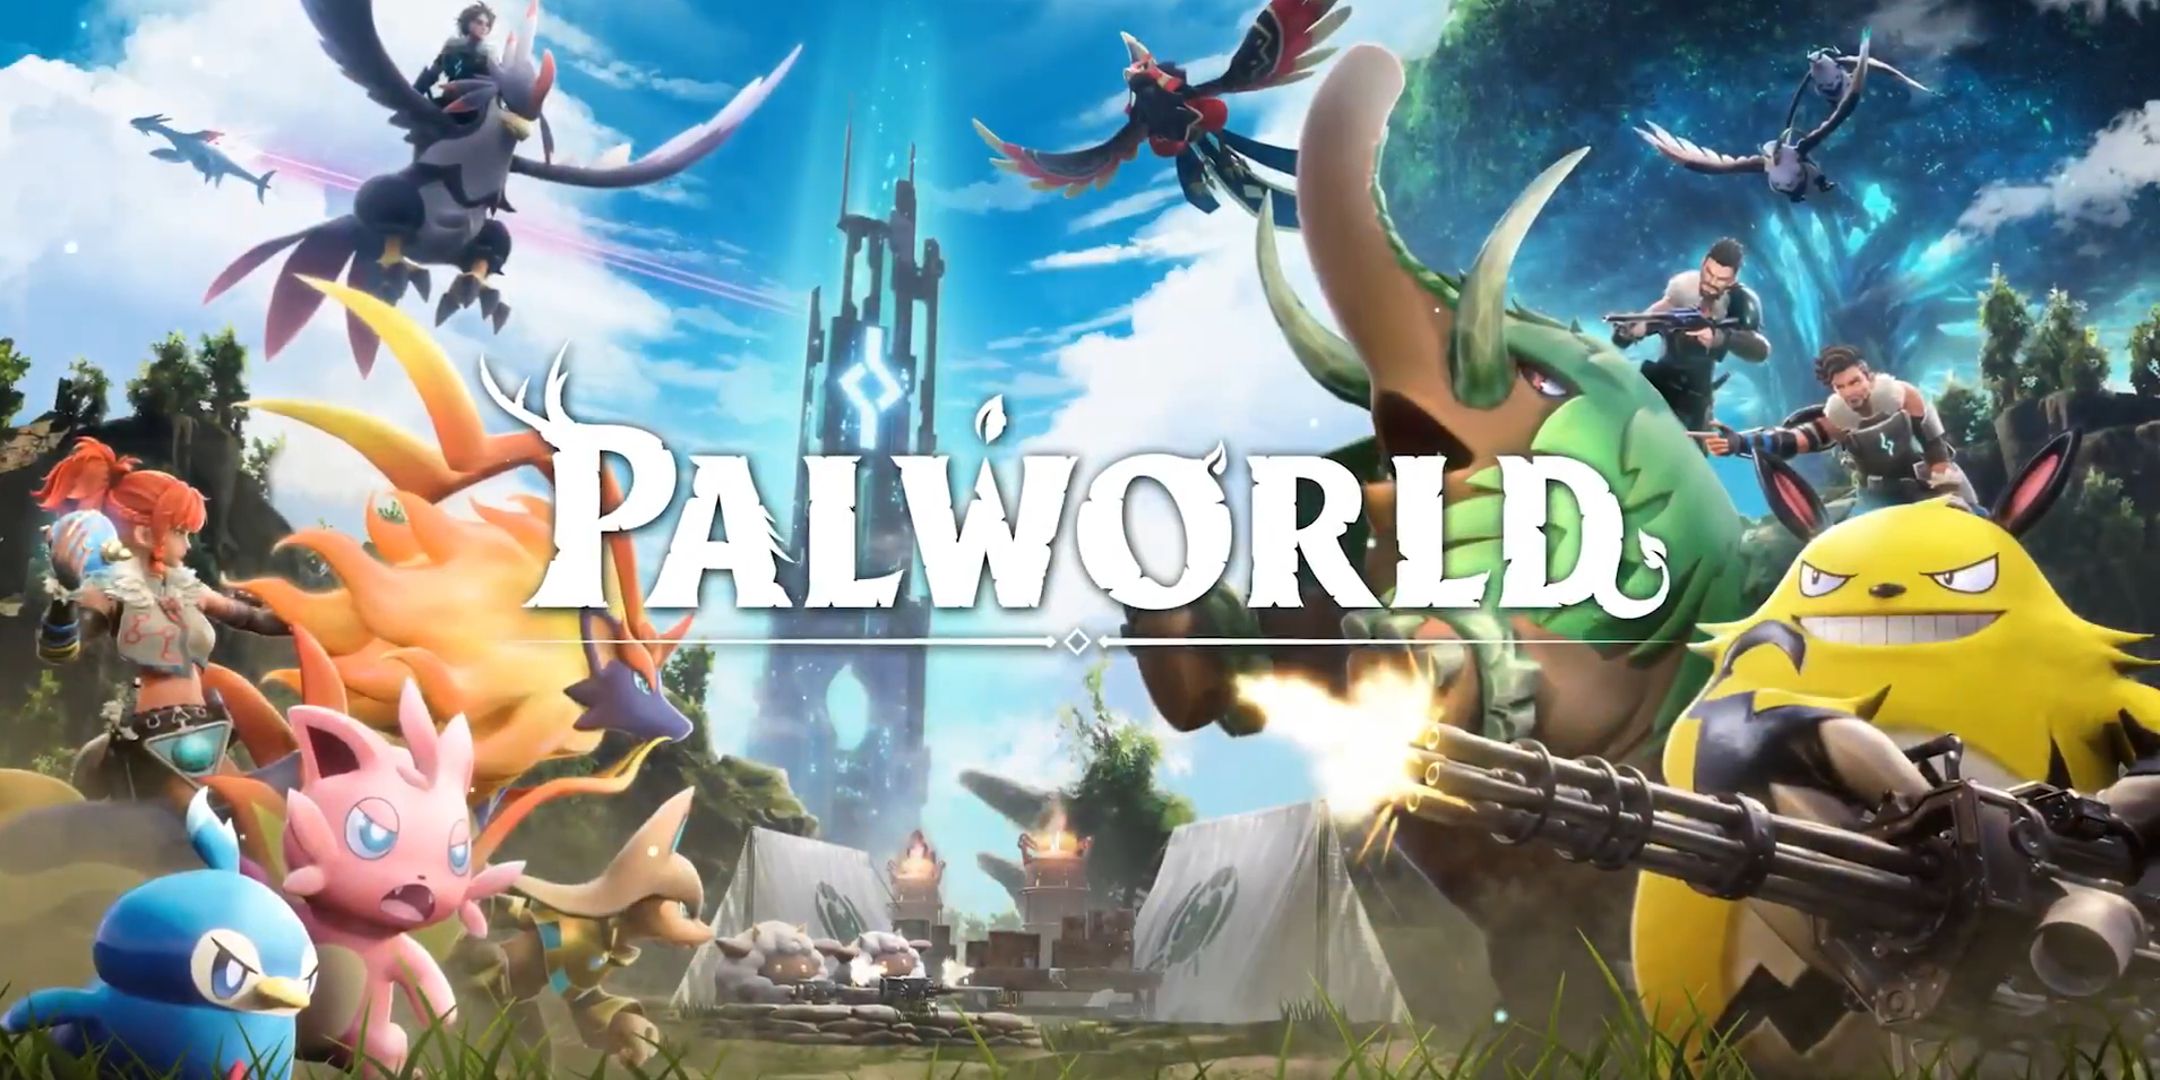 Palworld header